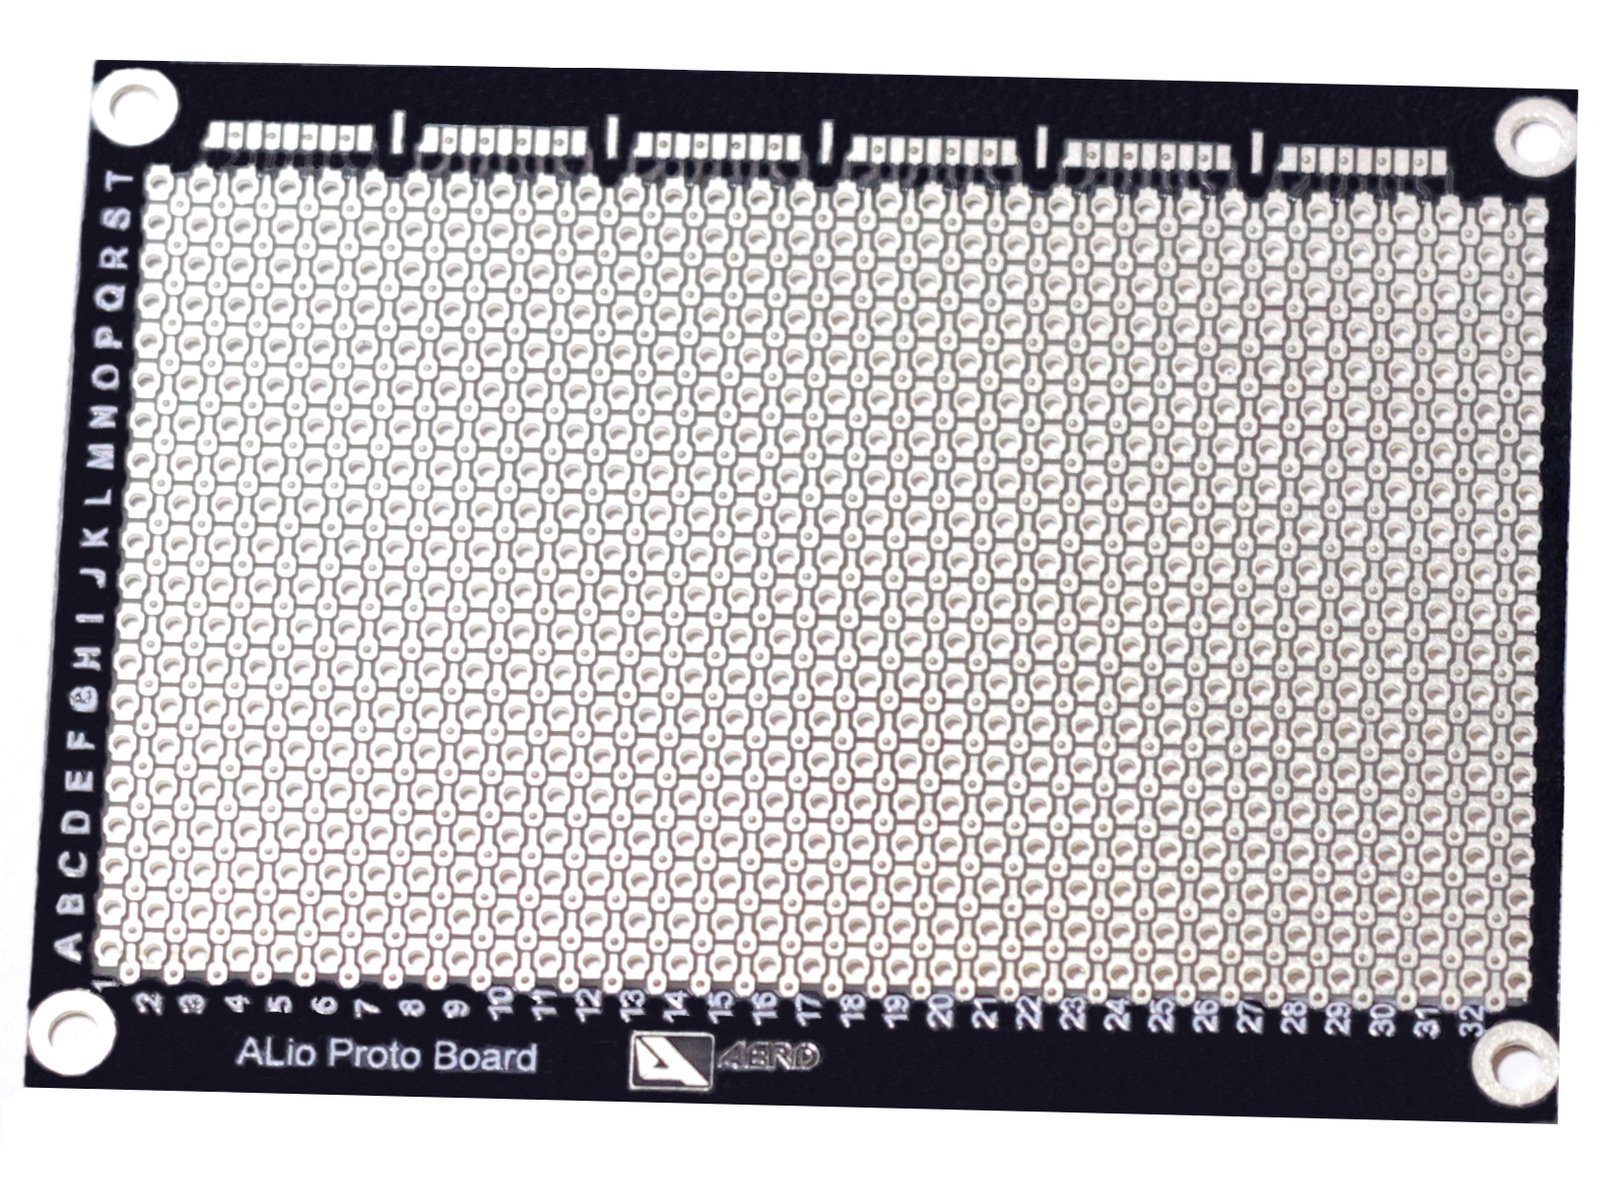 ALio basic board, top view.